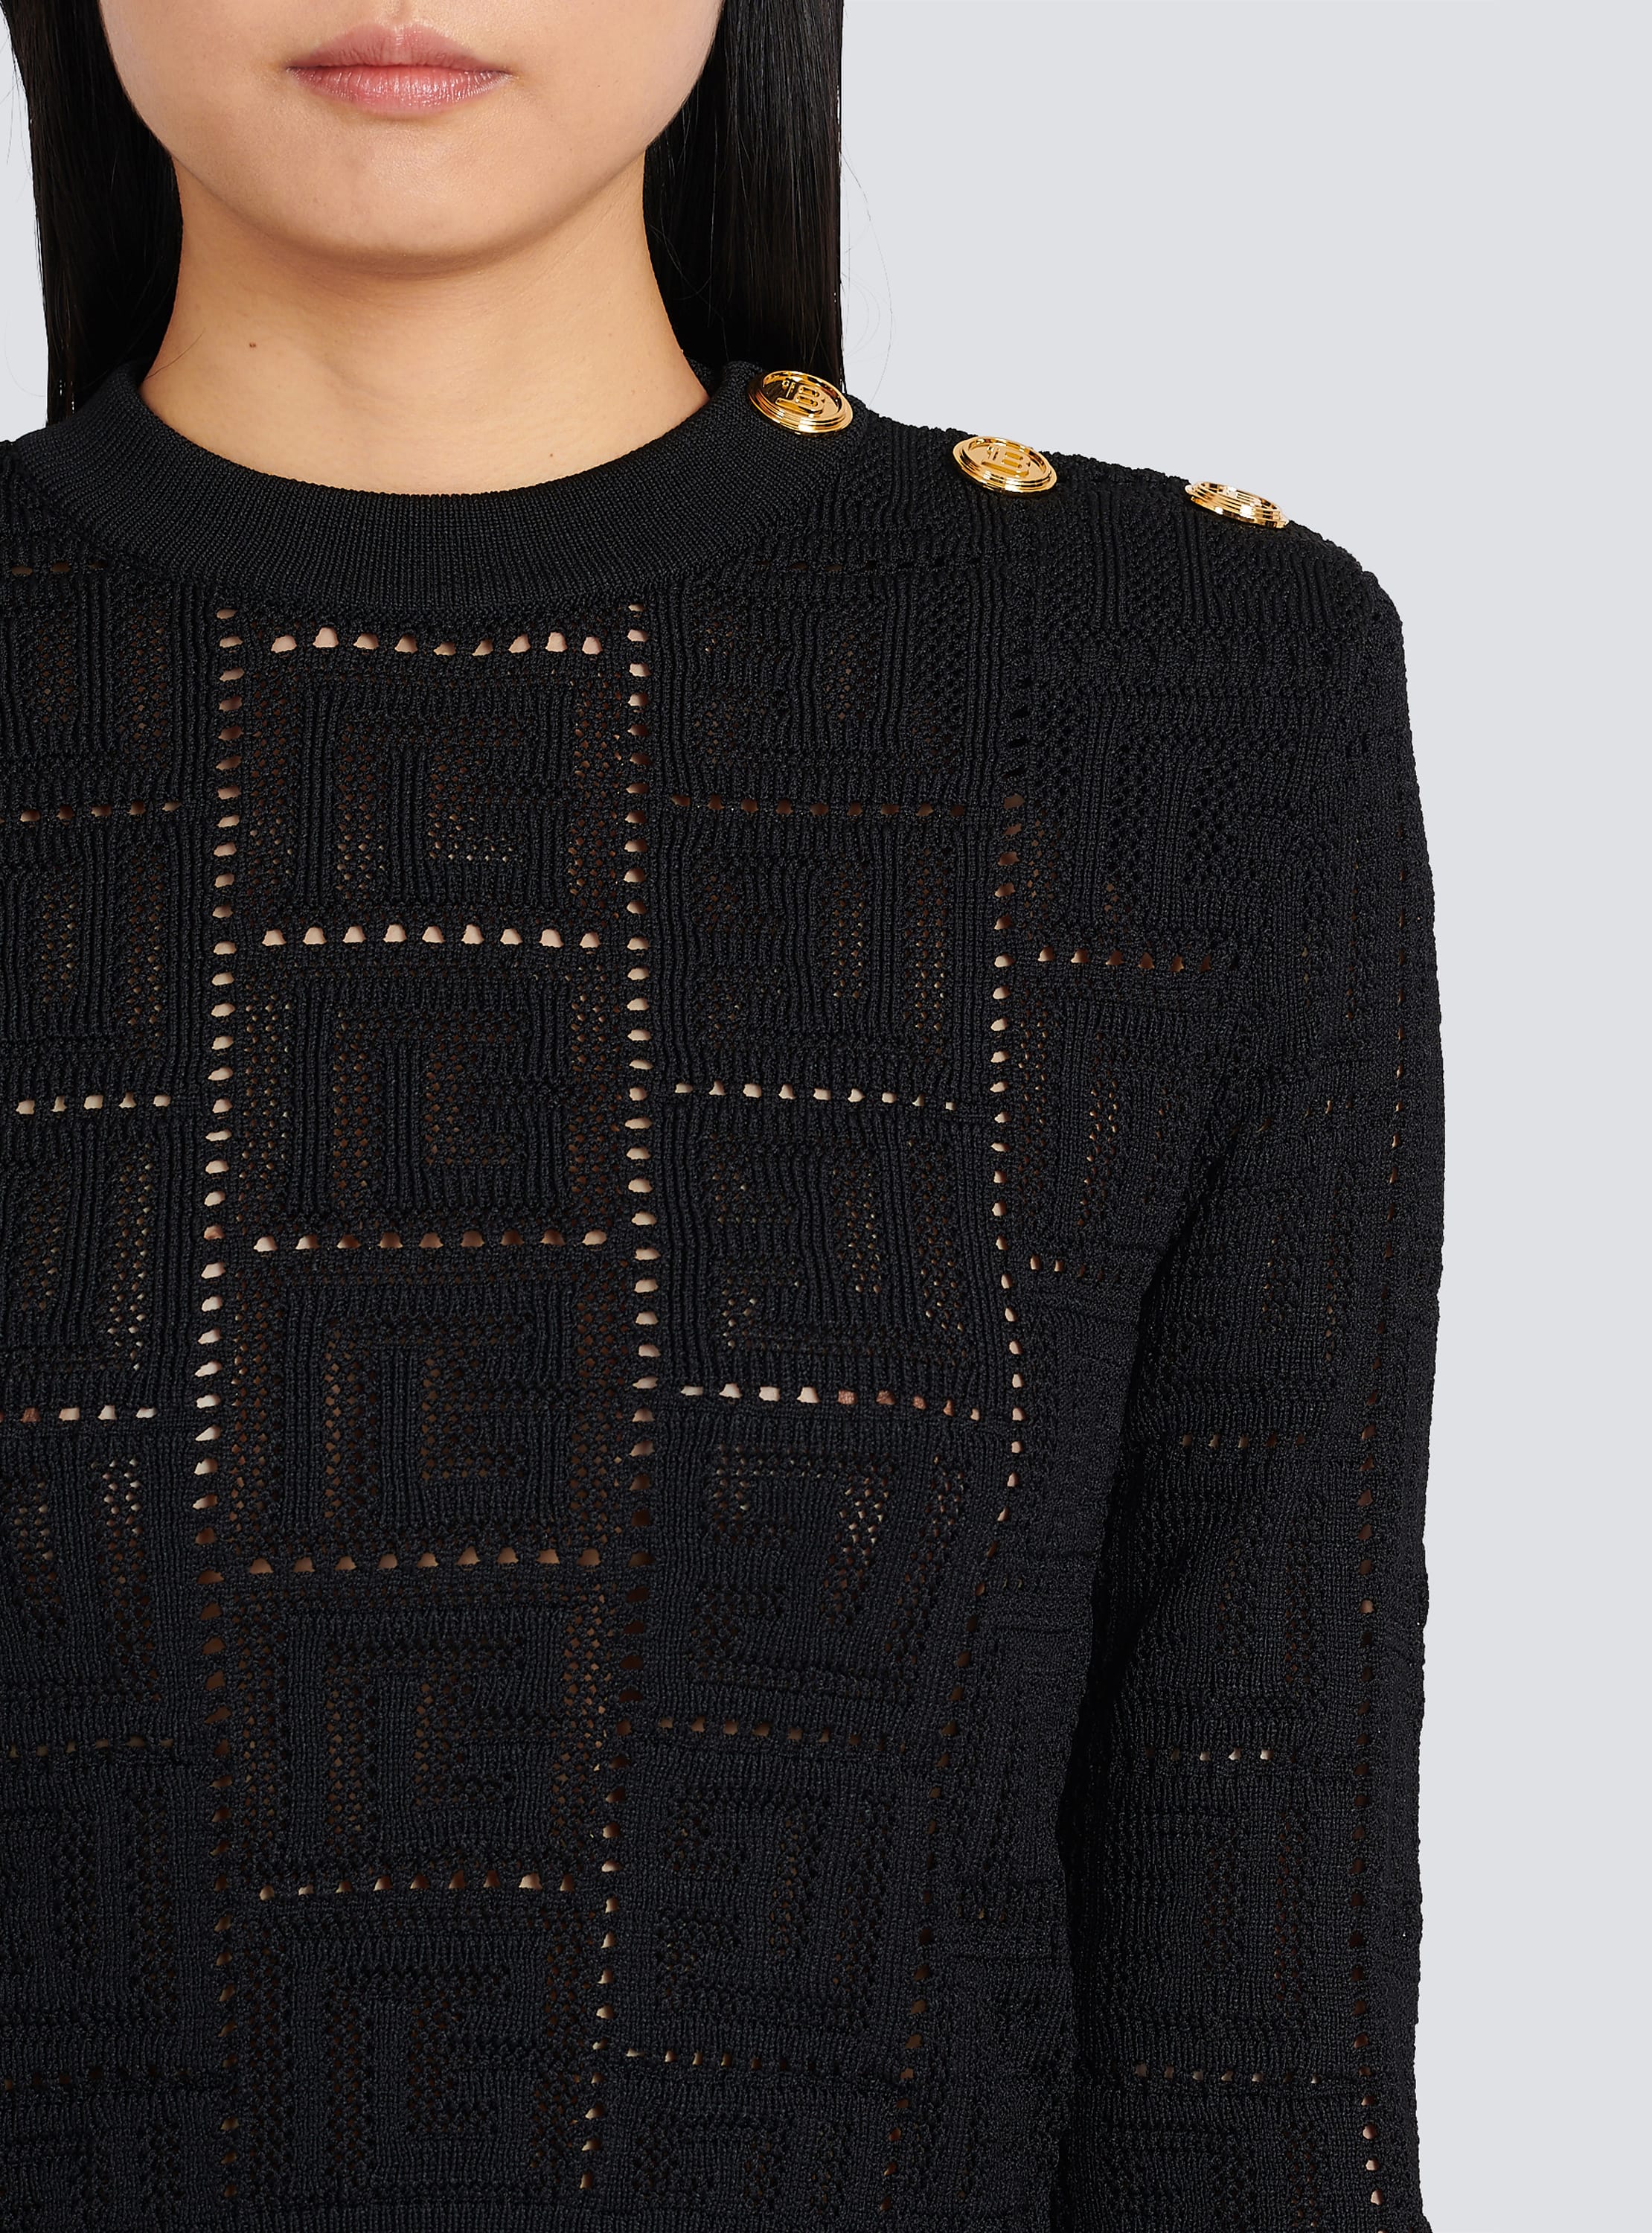 Cropped eco-designed sweater with Balmain monogram